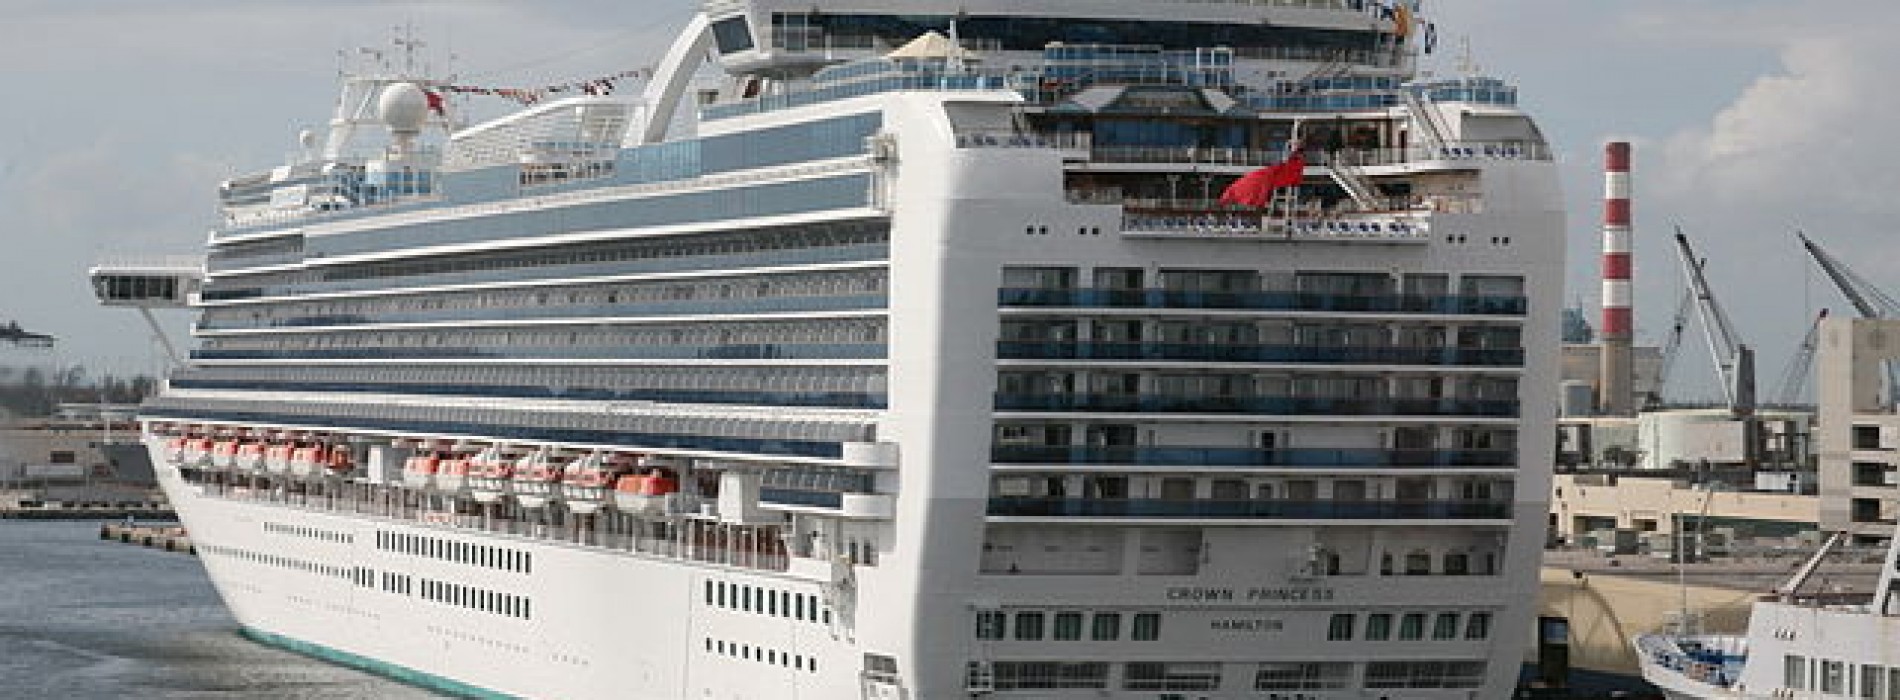 Diamond Princess Japan Cruise Fam Held In June 2014